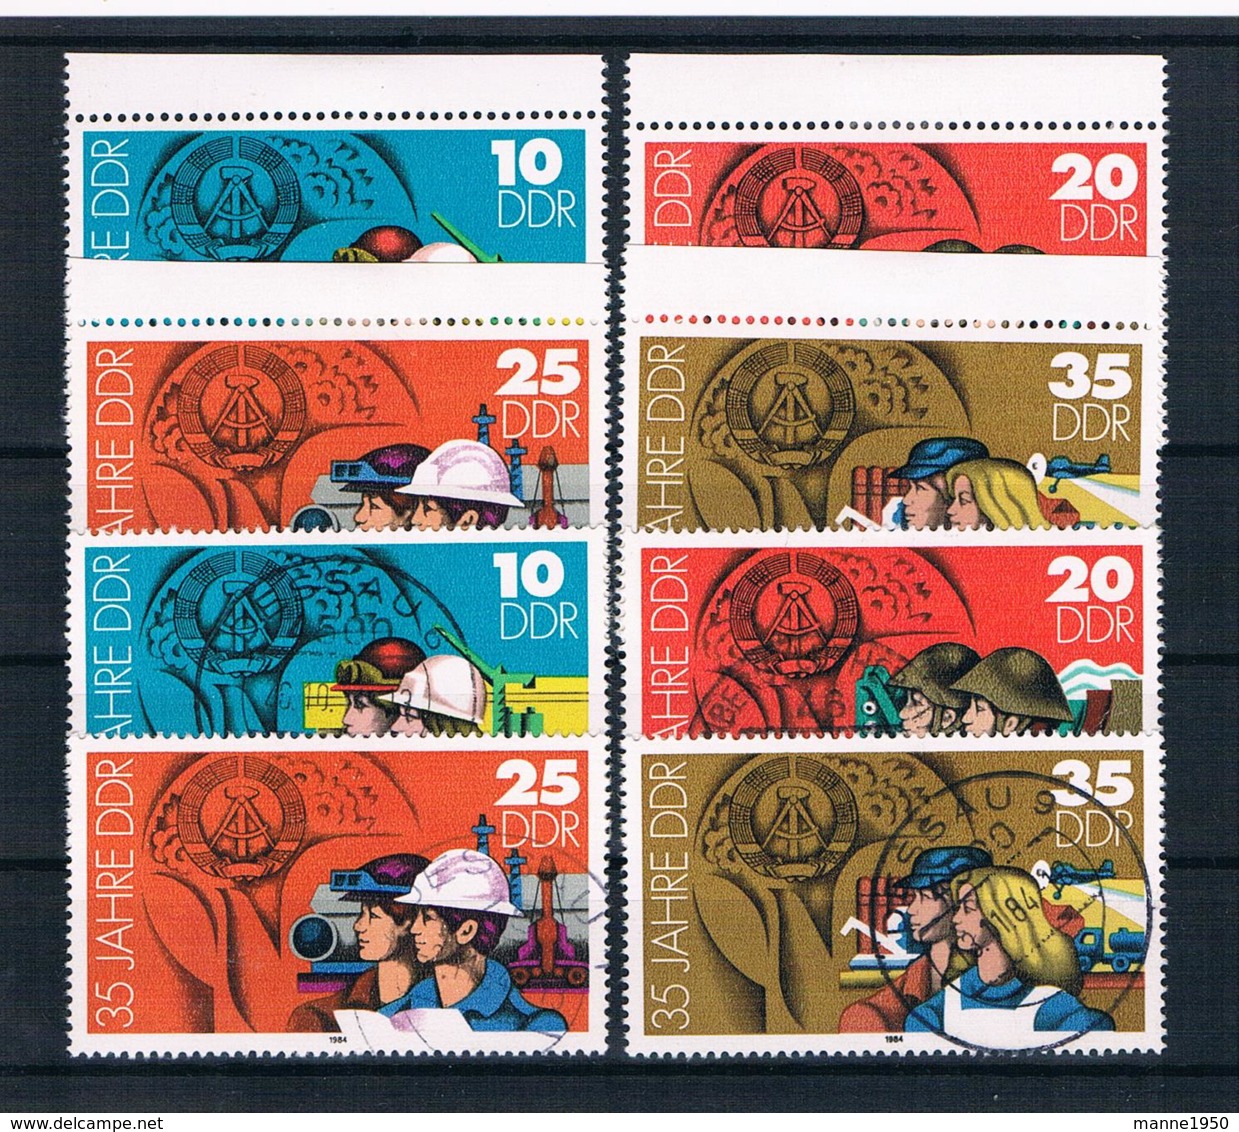 DDR 1984 Mi.Nr. 2898/901 Kpl. Satz ** + Gestempelt - Unused Stamps